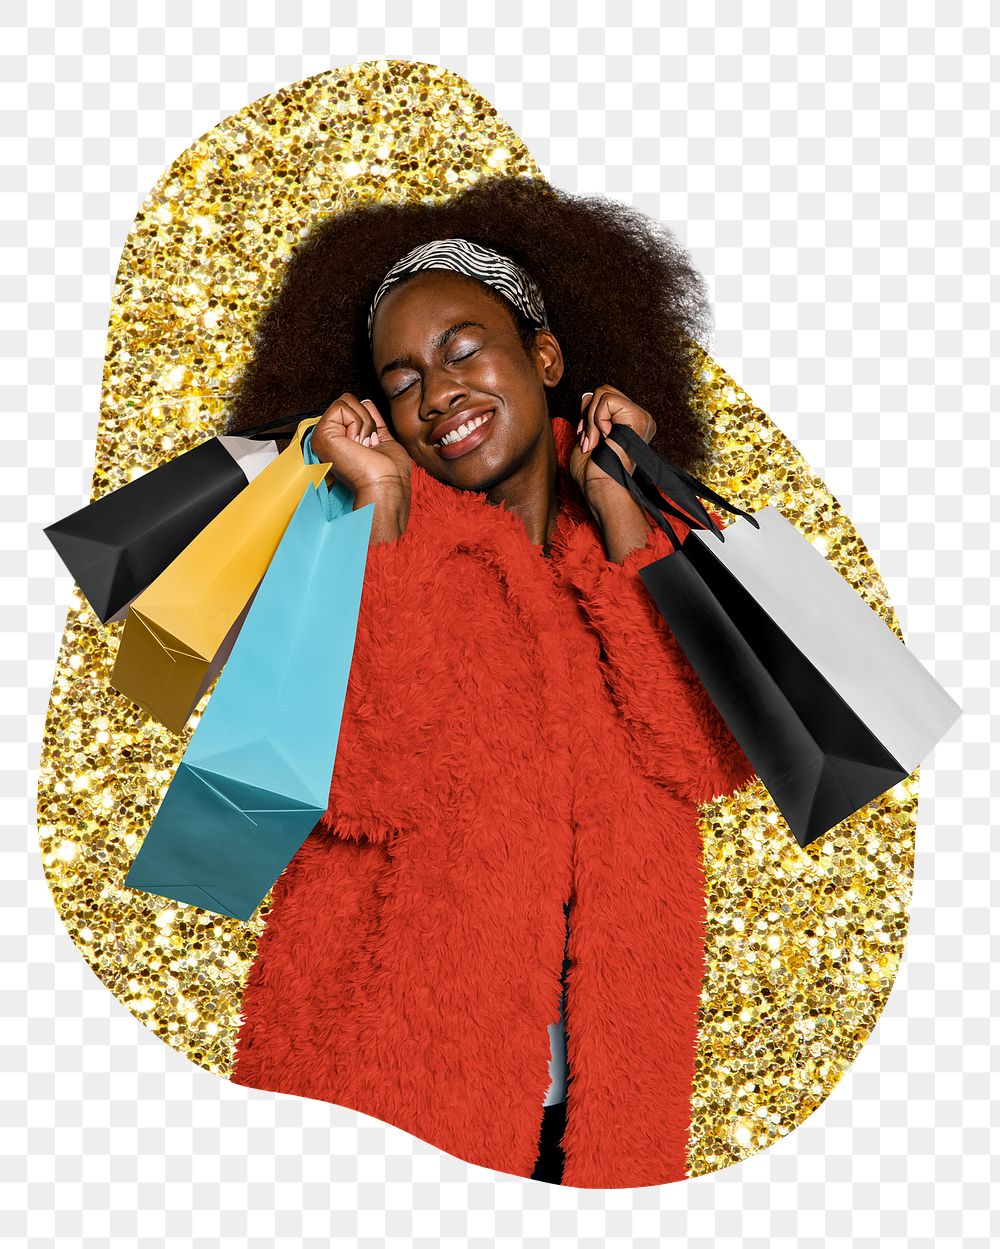 Woman shopping png sticker, gold glitter blob shape, transparent background